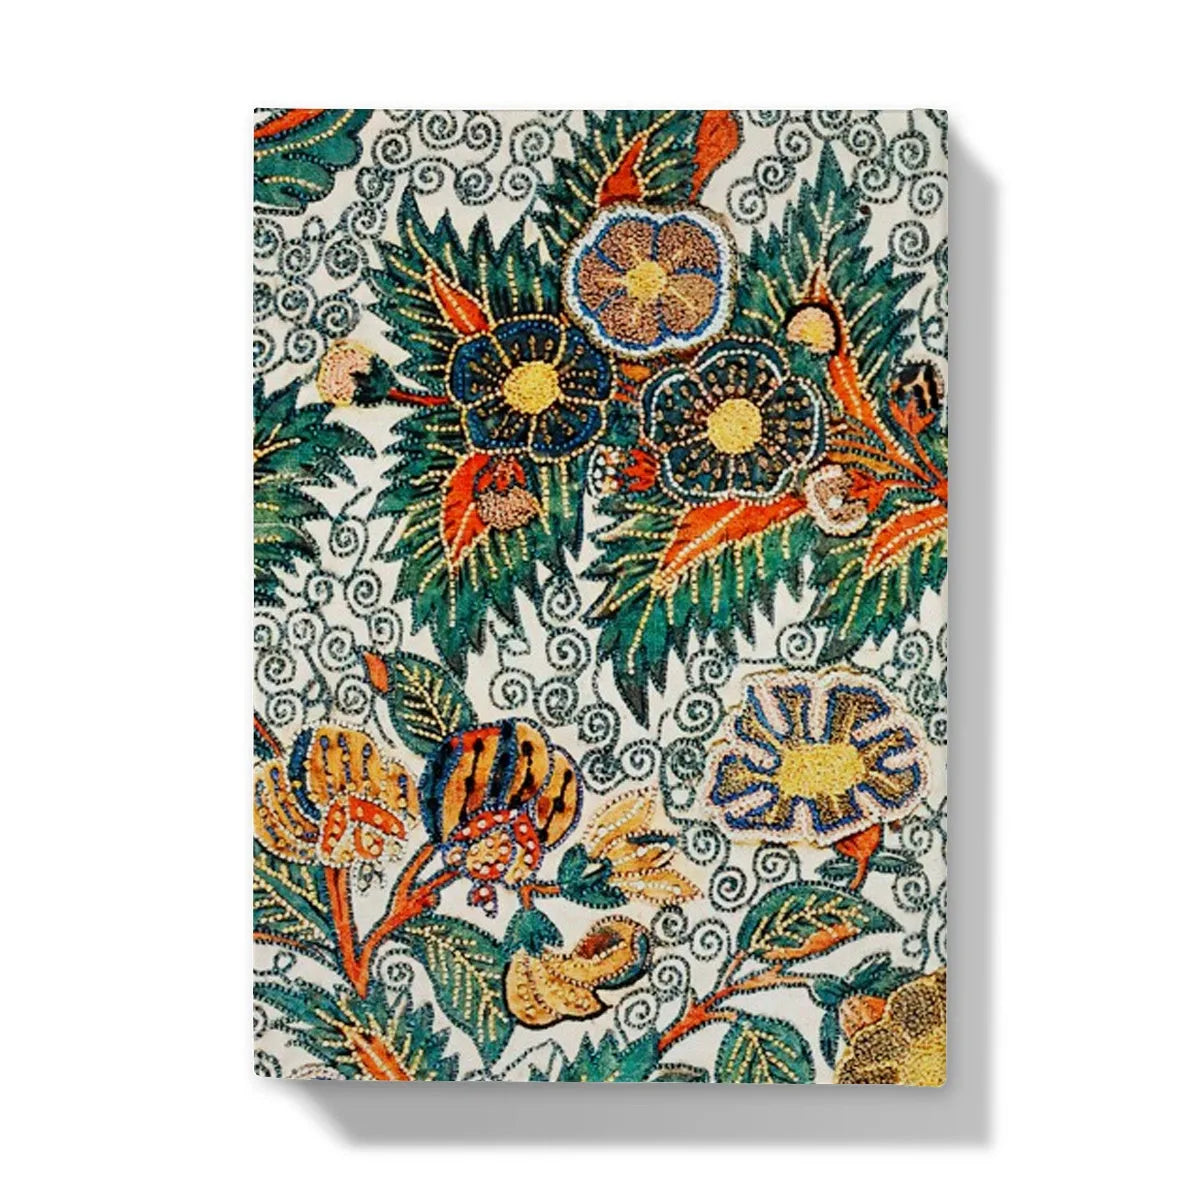 Blossomewhere - Antique Japanese Tapestry Art Journal - Notebooks & Notepads - Aesthetic Art